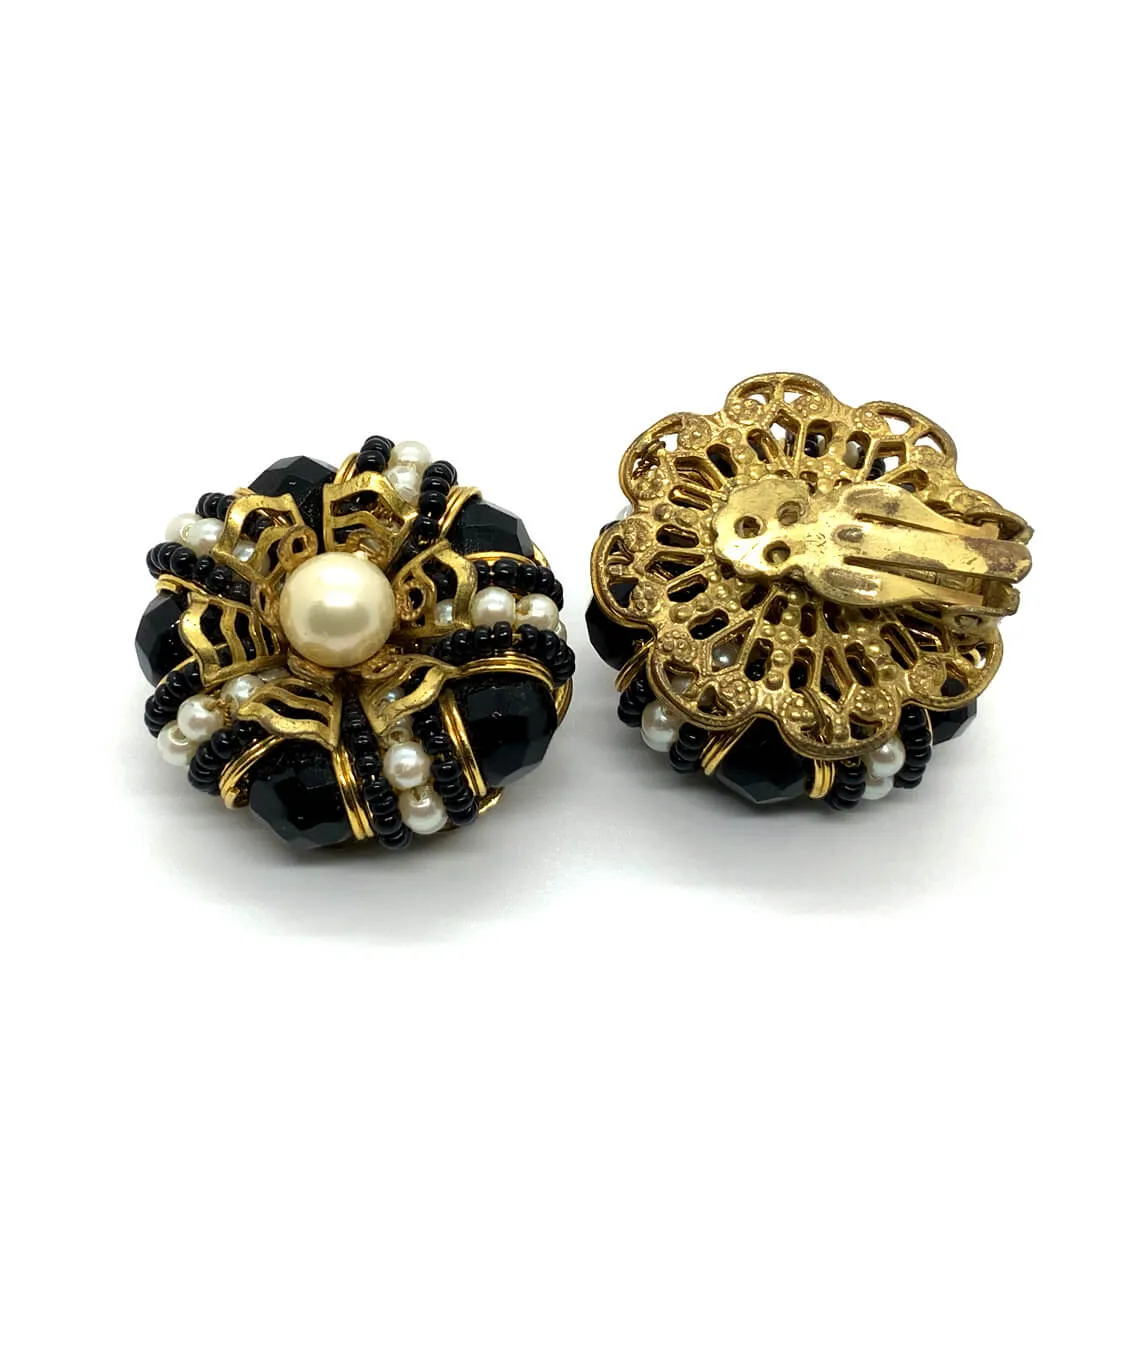 Black pearl and gold vintage earrings